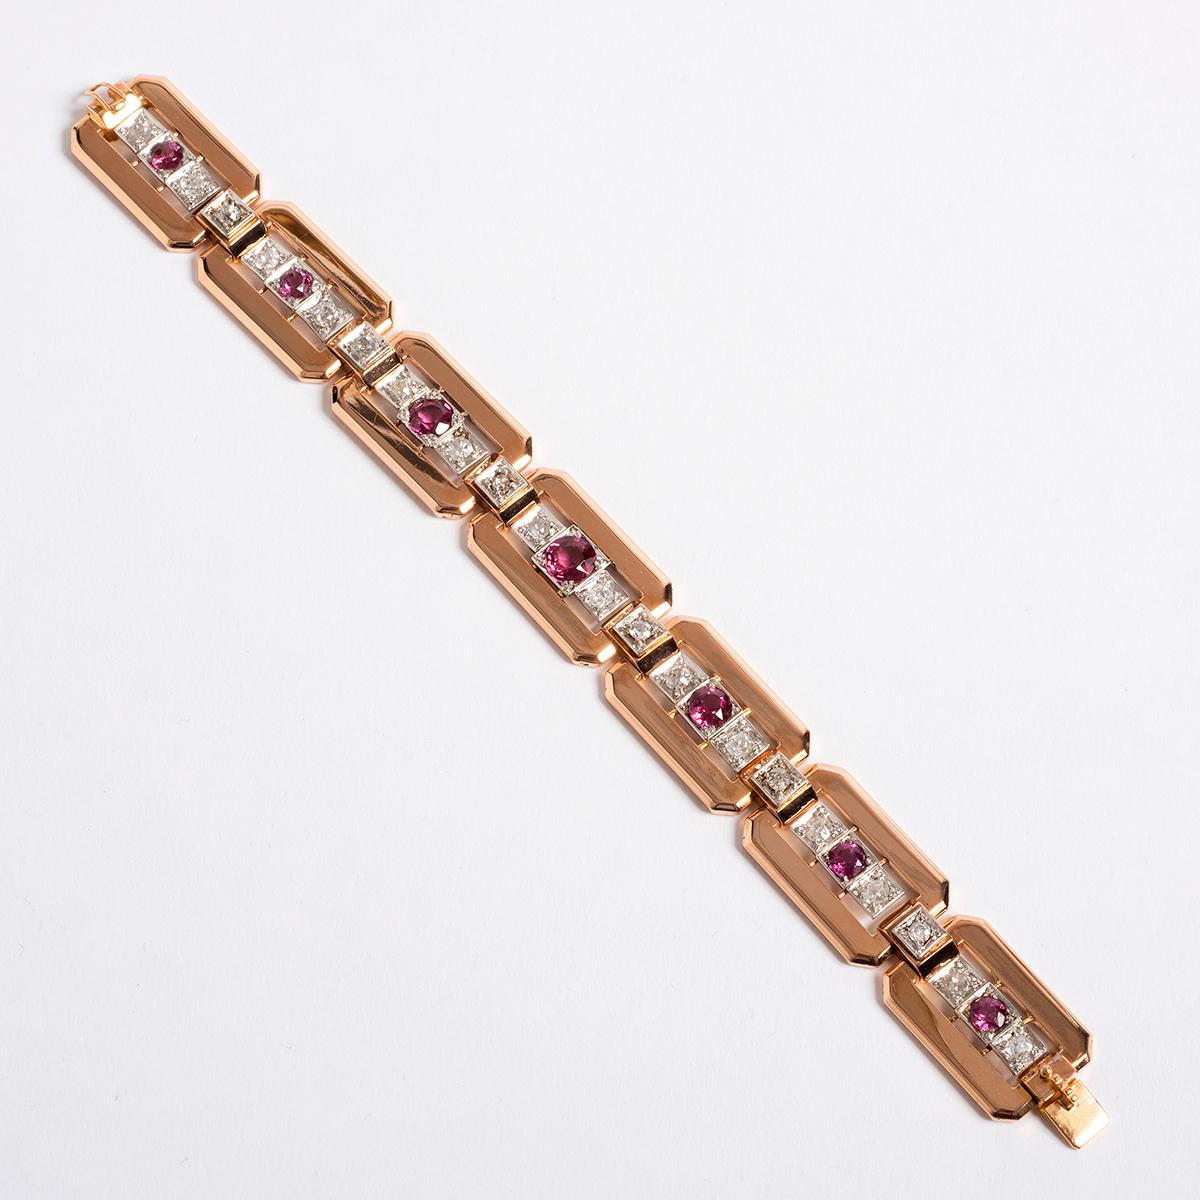 Rose Cut Victorian 18 Karat Gold Garnet Bracelet with 20 Old Cut Diamonds Est 1.8 Carat